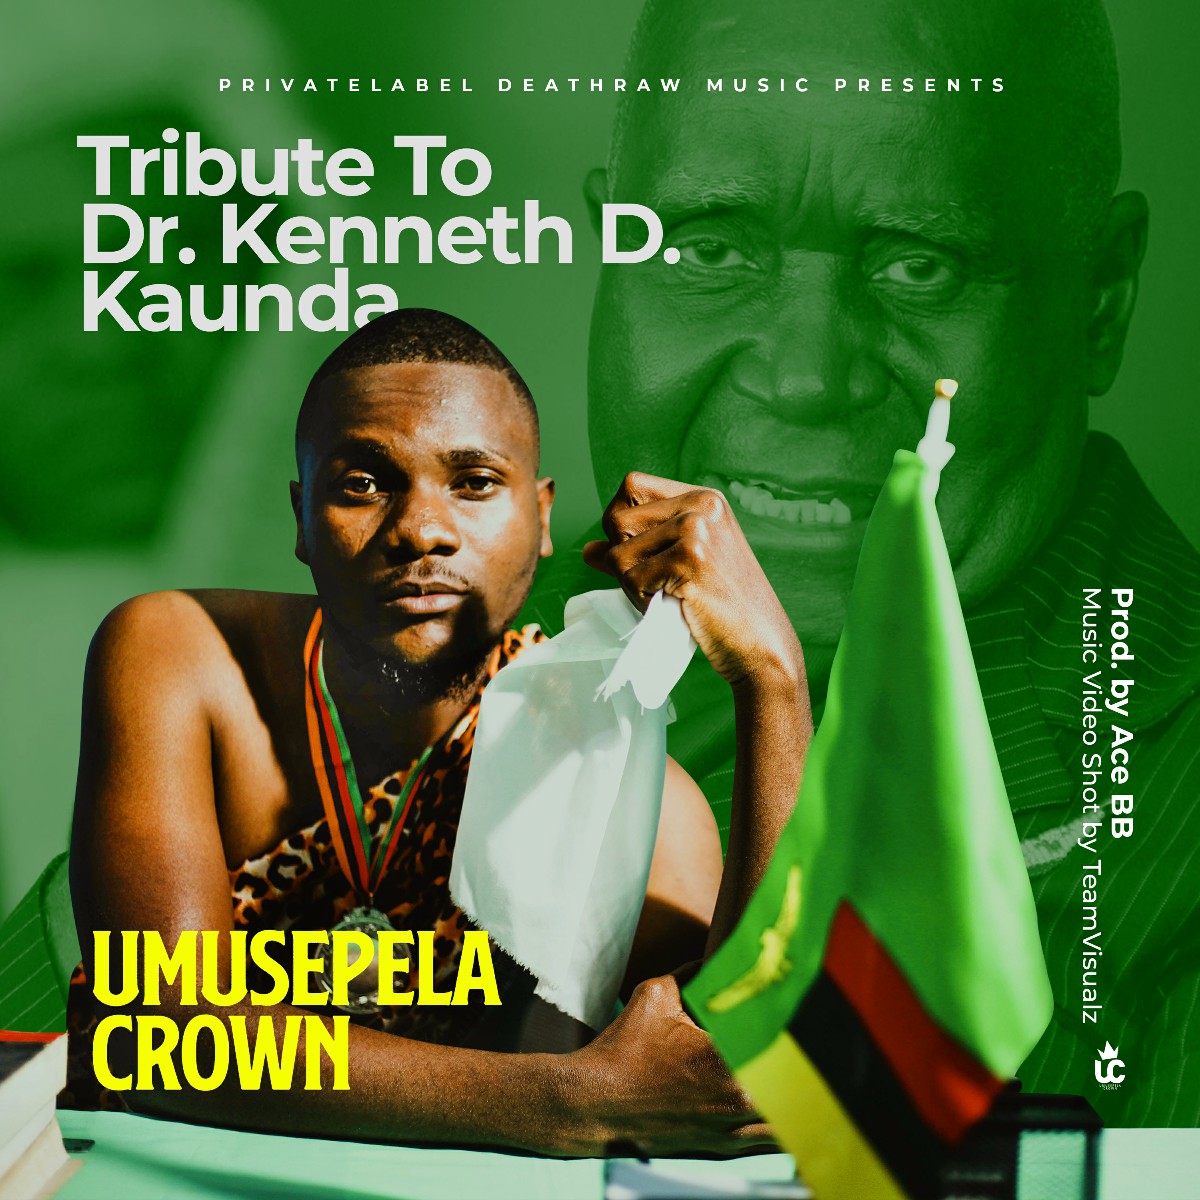 Umusepela Crown - Tribute To Dr. Kenneth D. Kaunda (Official Video)